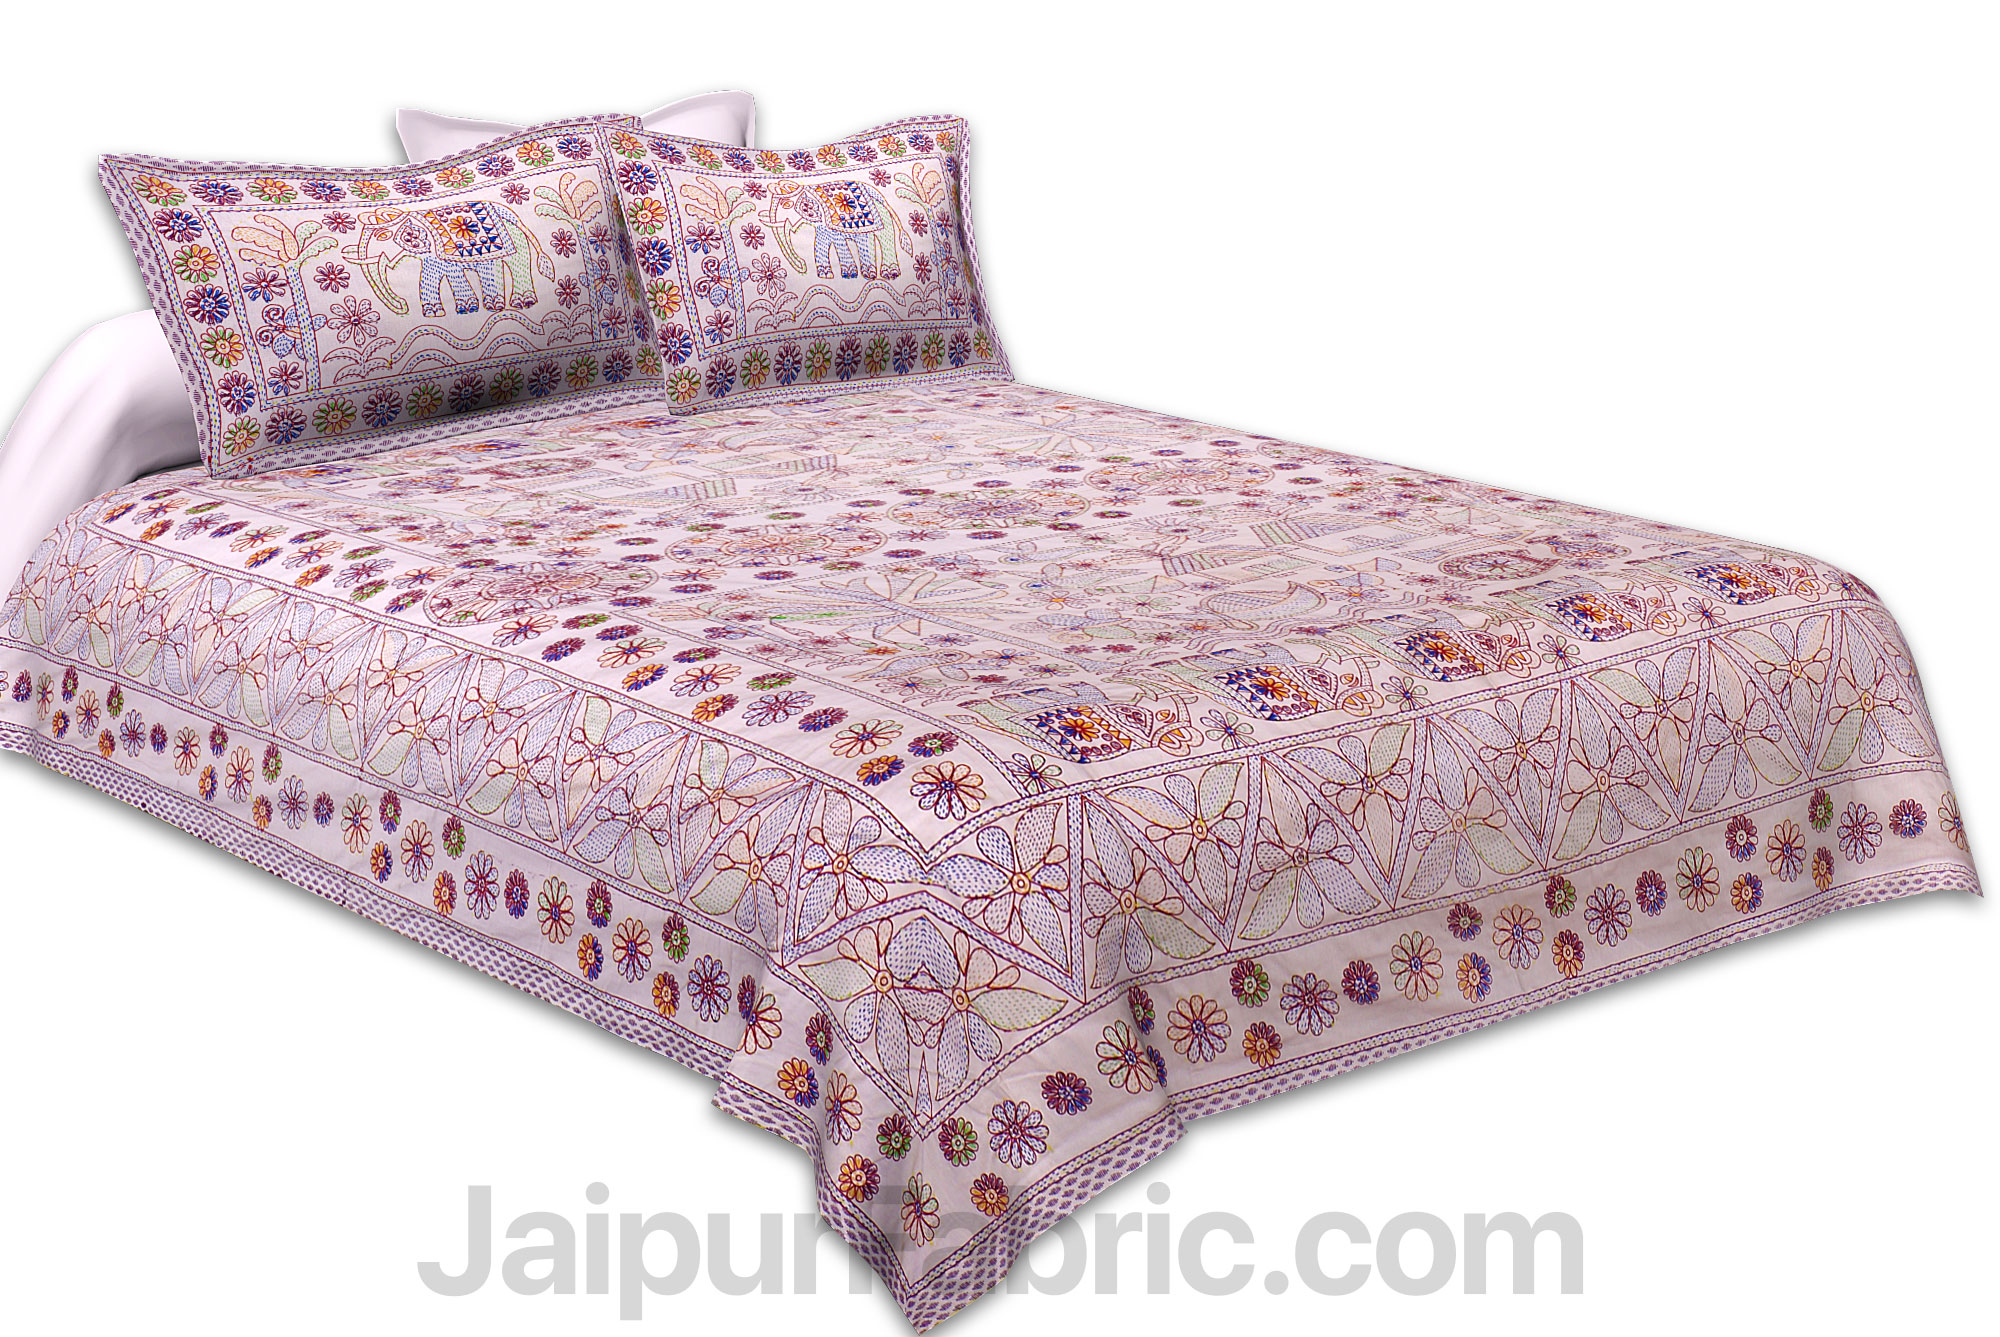 Beautiful Scenery Kantha Thread Work Embroidery Double Bedsheet / Dohar / Light Blanket / Thin Comforter